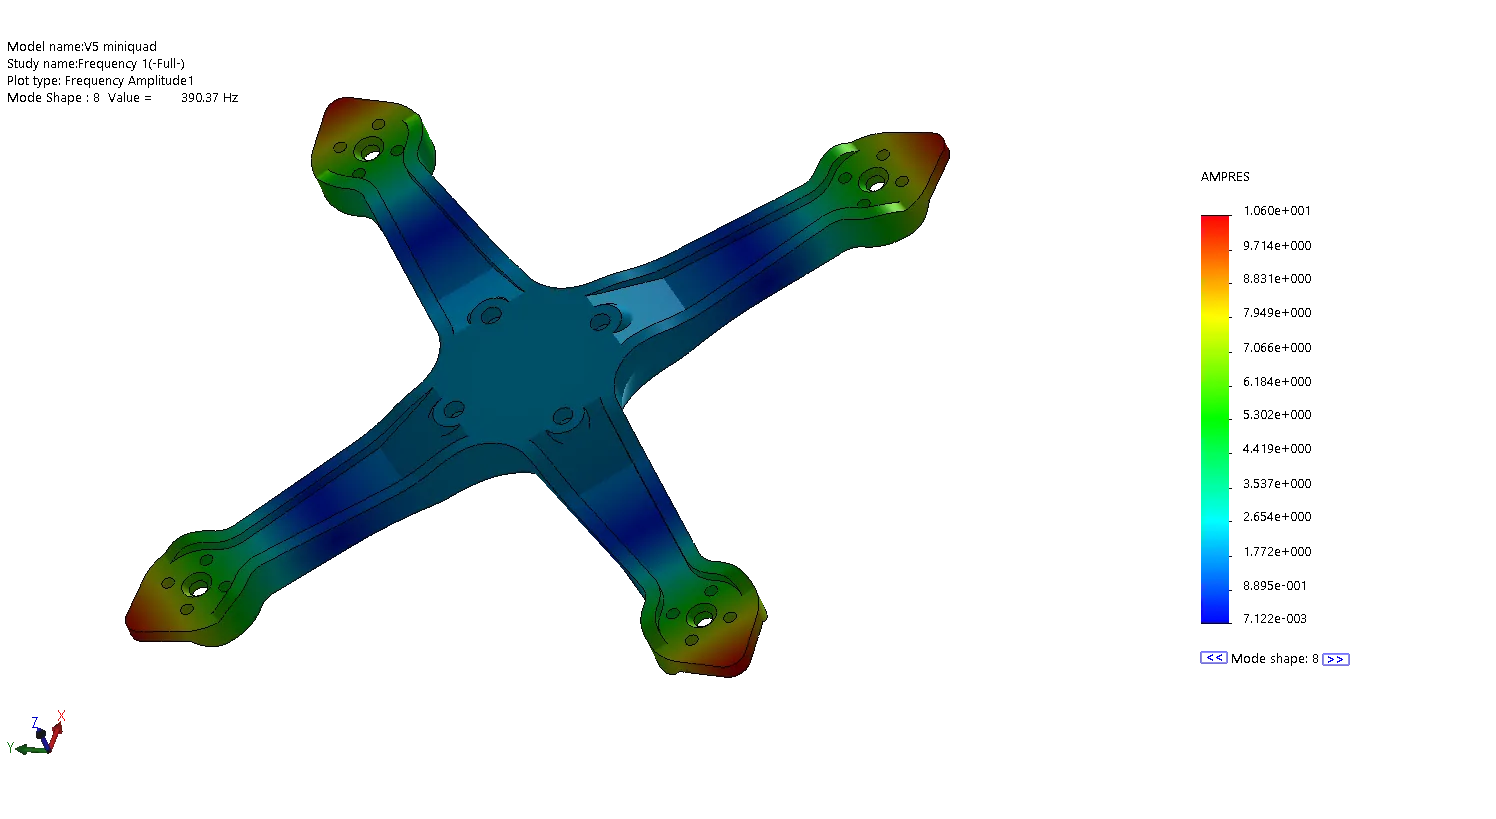 Drone Designed in SOLIDWORKS Simulation